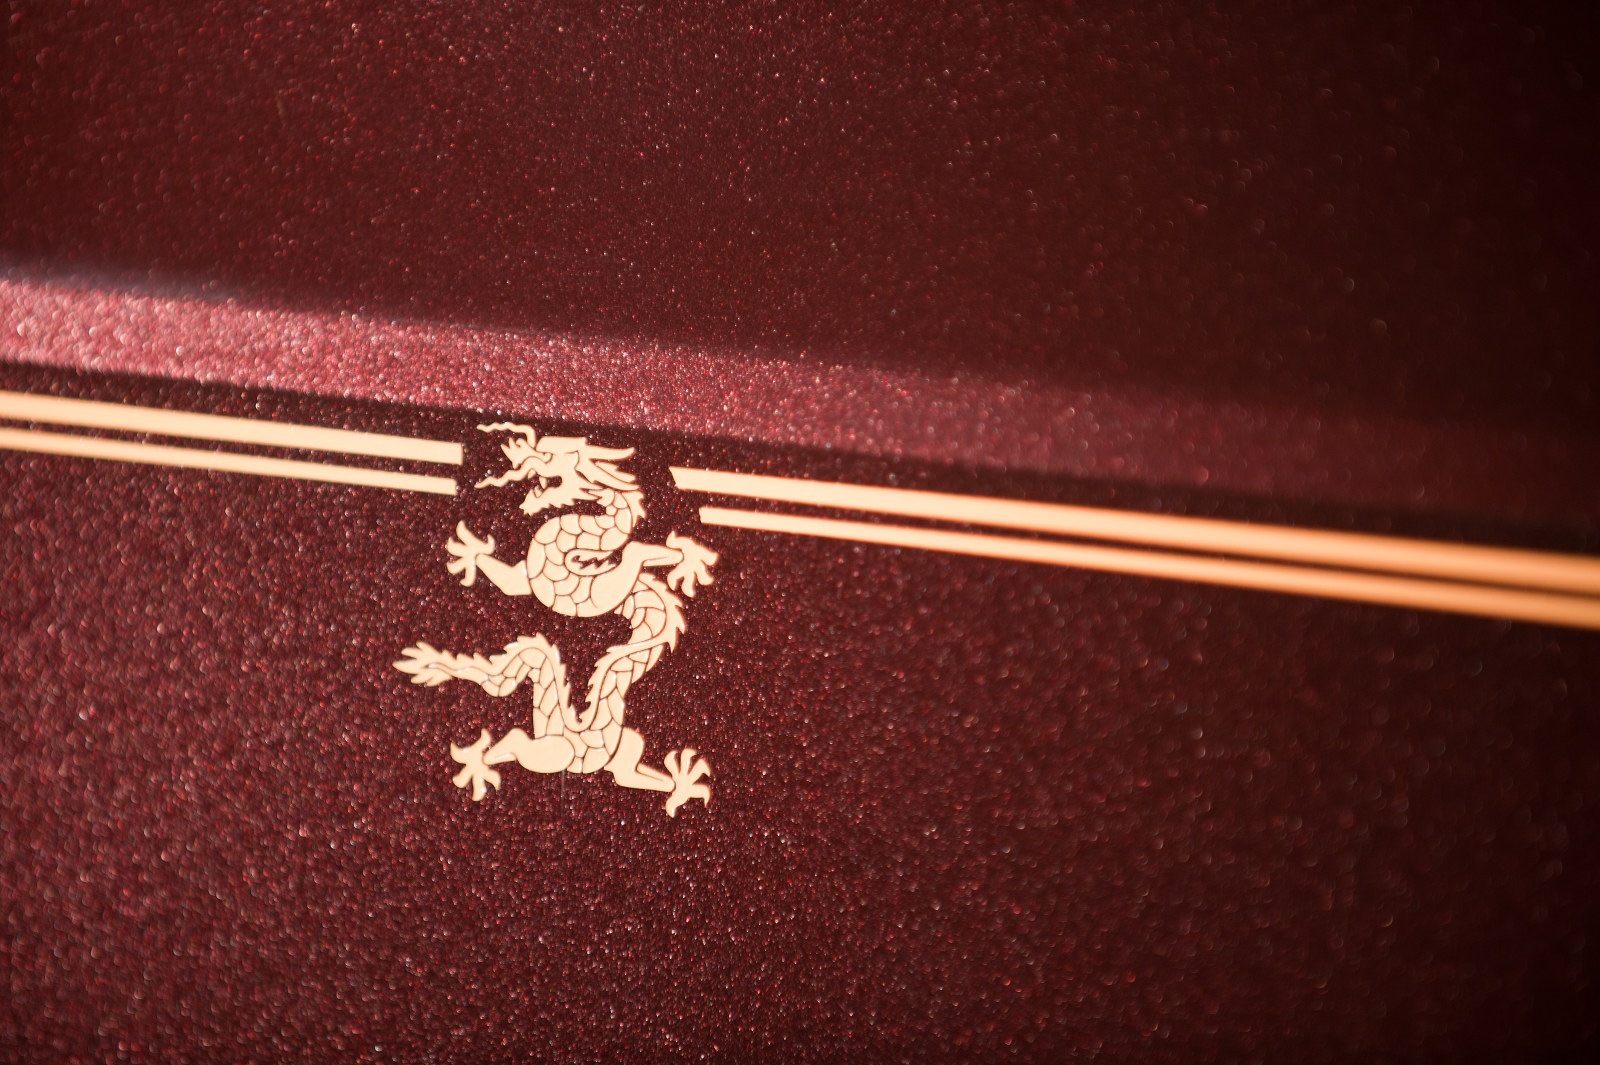 Rolls Royce Phantom Year of the Dragon - dragon din aur pictat pe caroserie